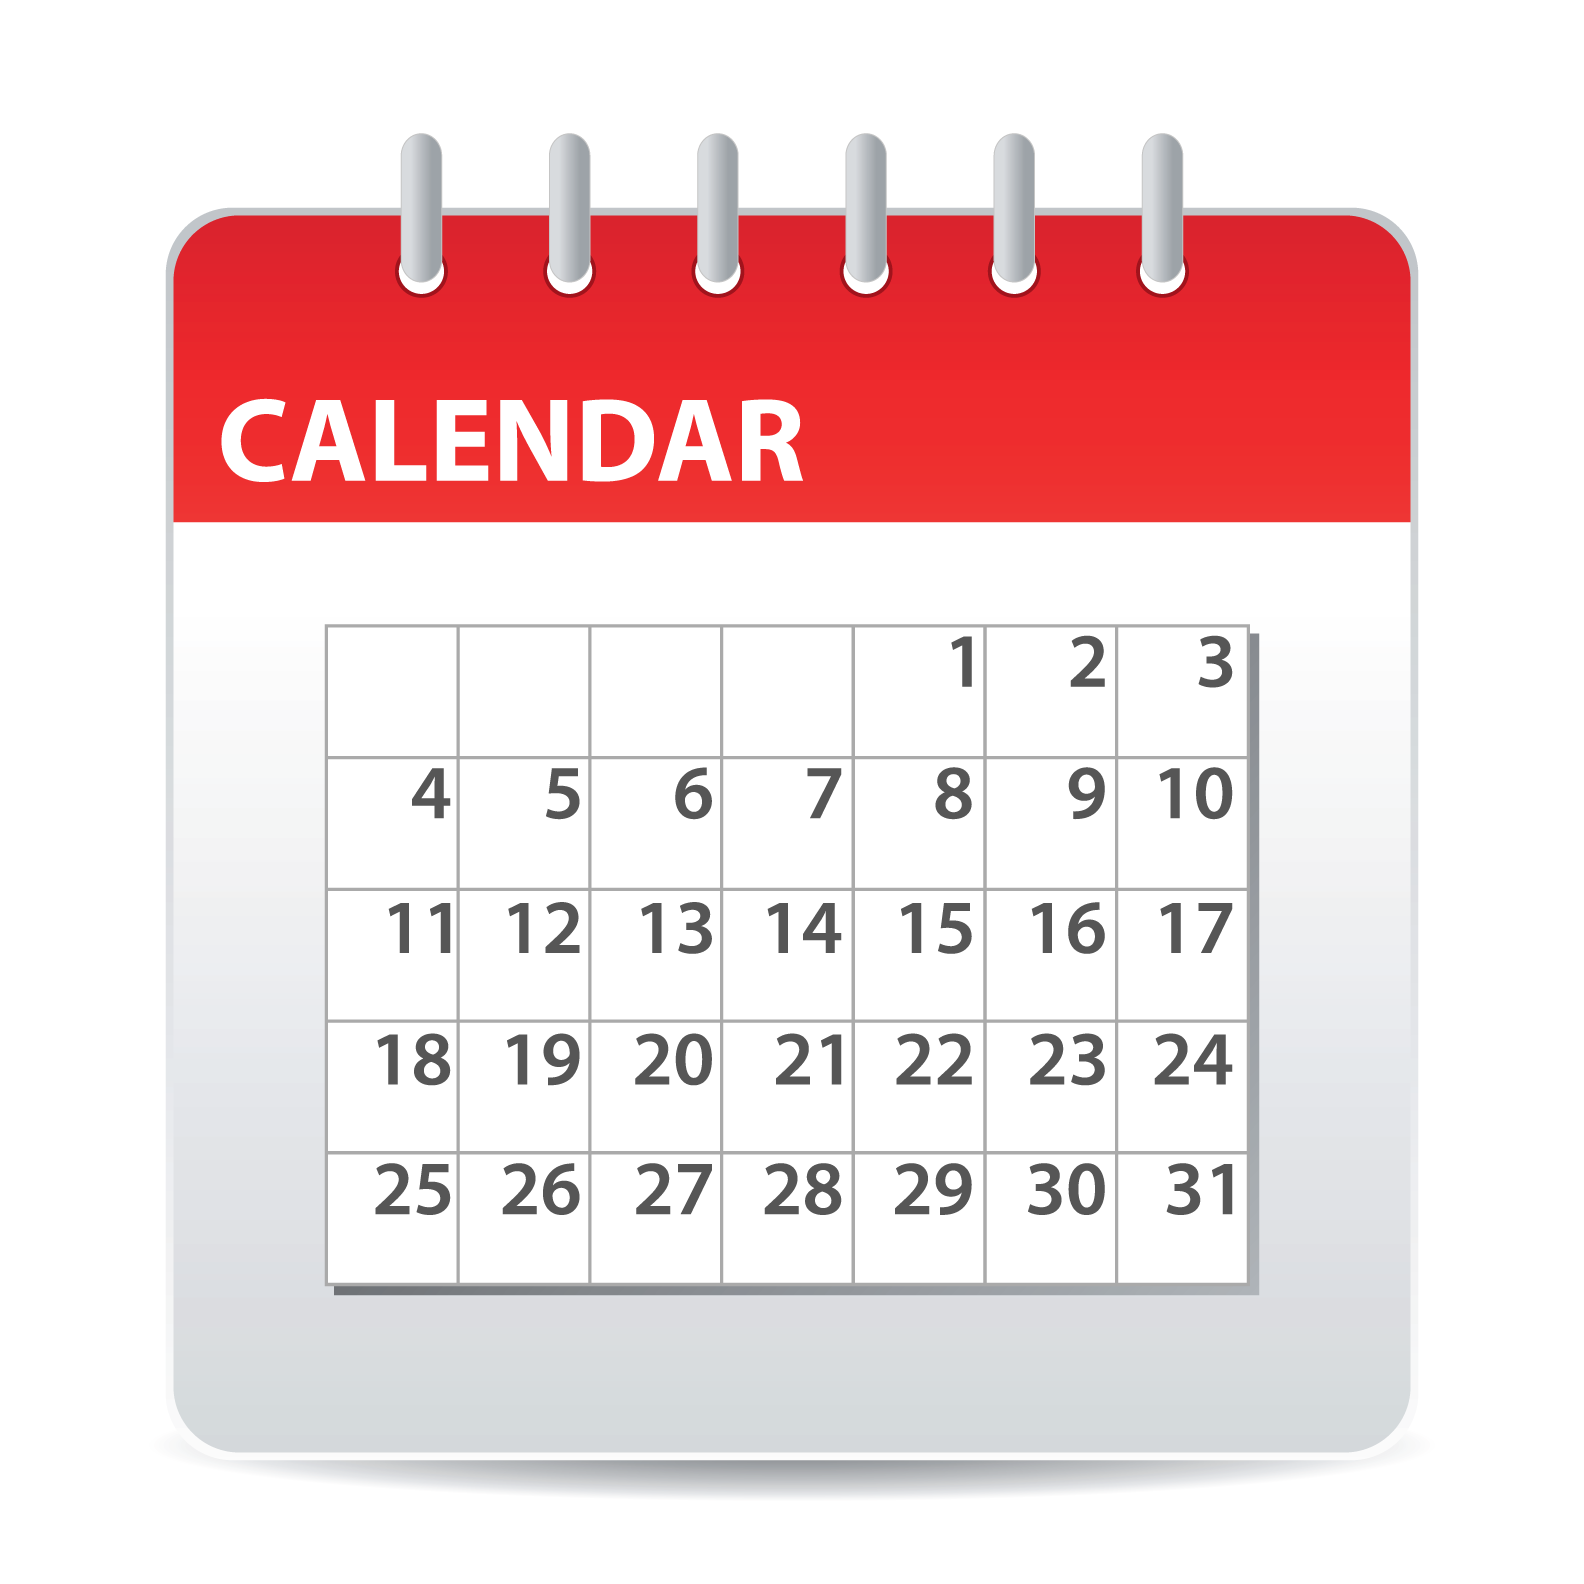 Calendar of Programs